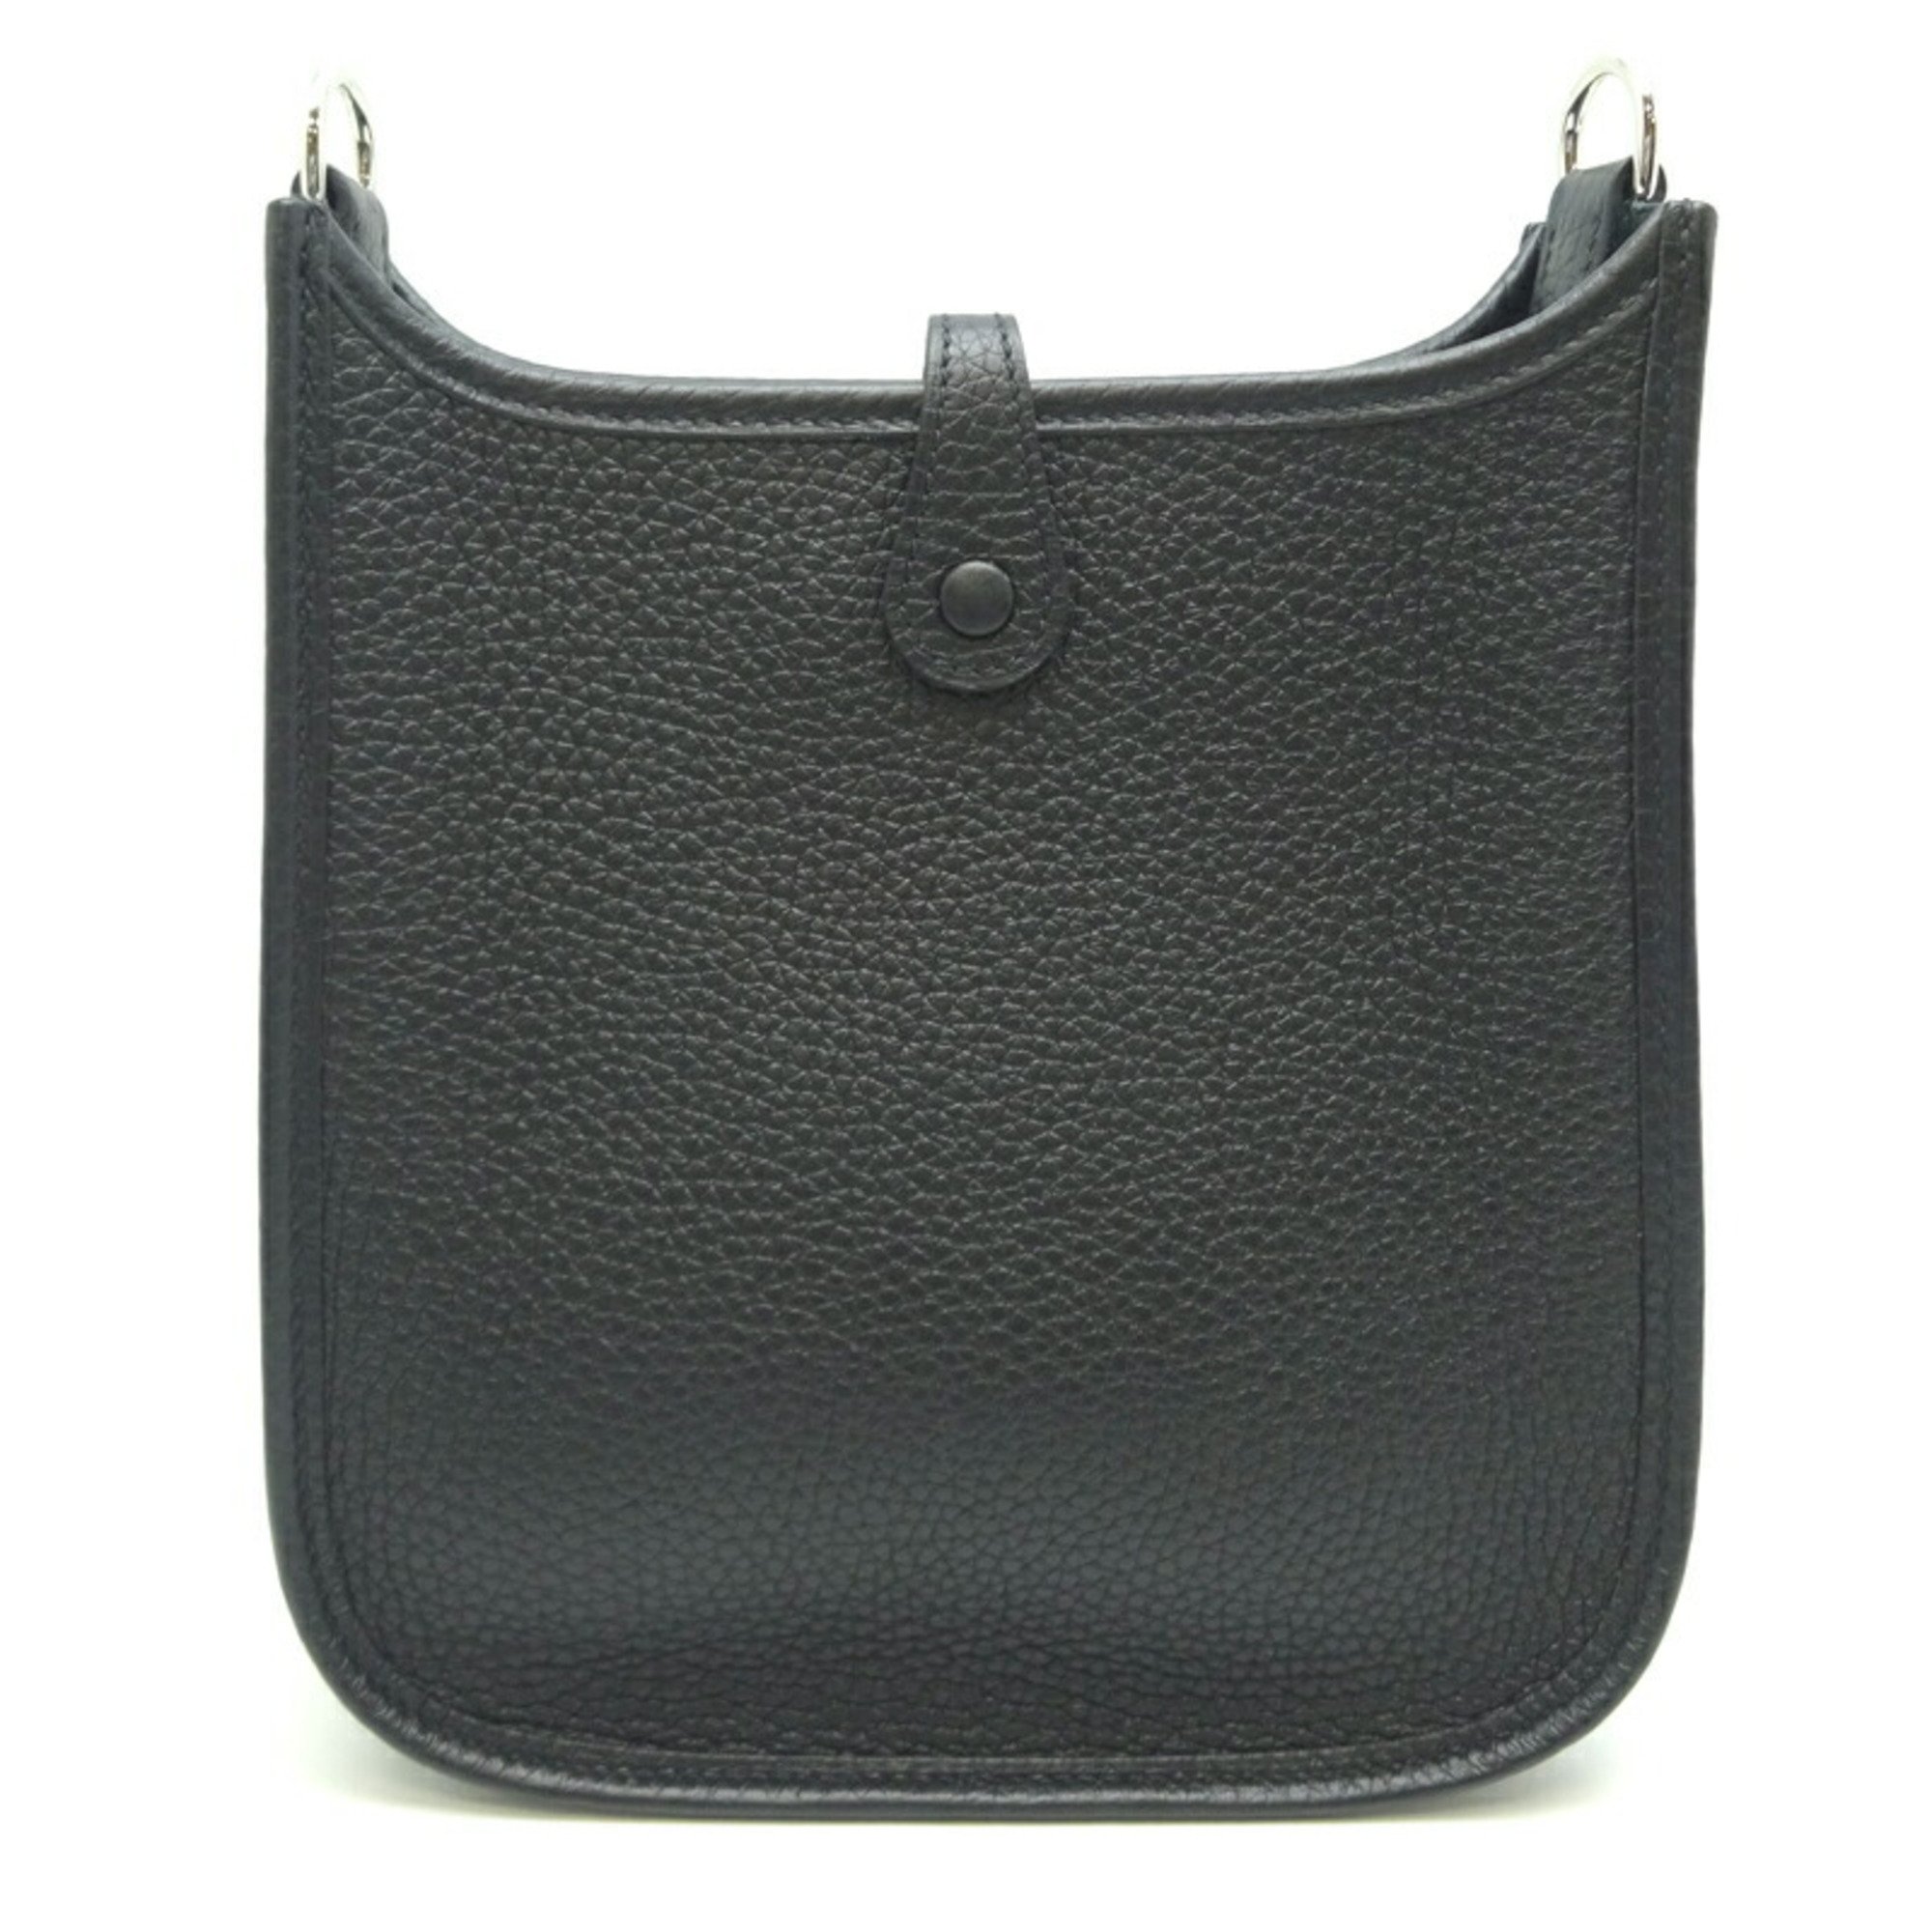 Hermes Evelyn TPM Amazon U stamp Palladium (silver) hardware Women's shoulder bag Taurillon Noir (black)